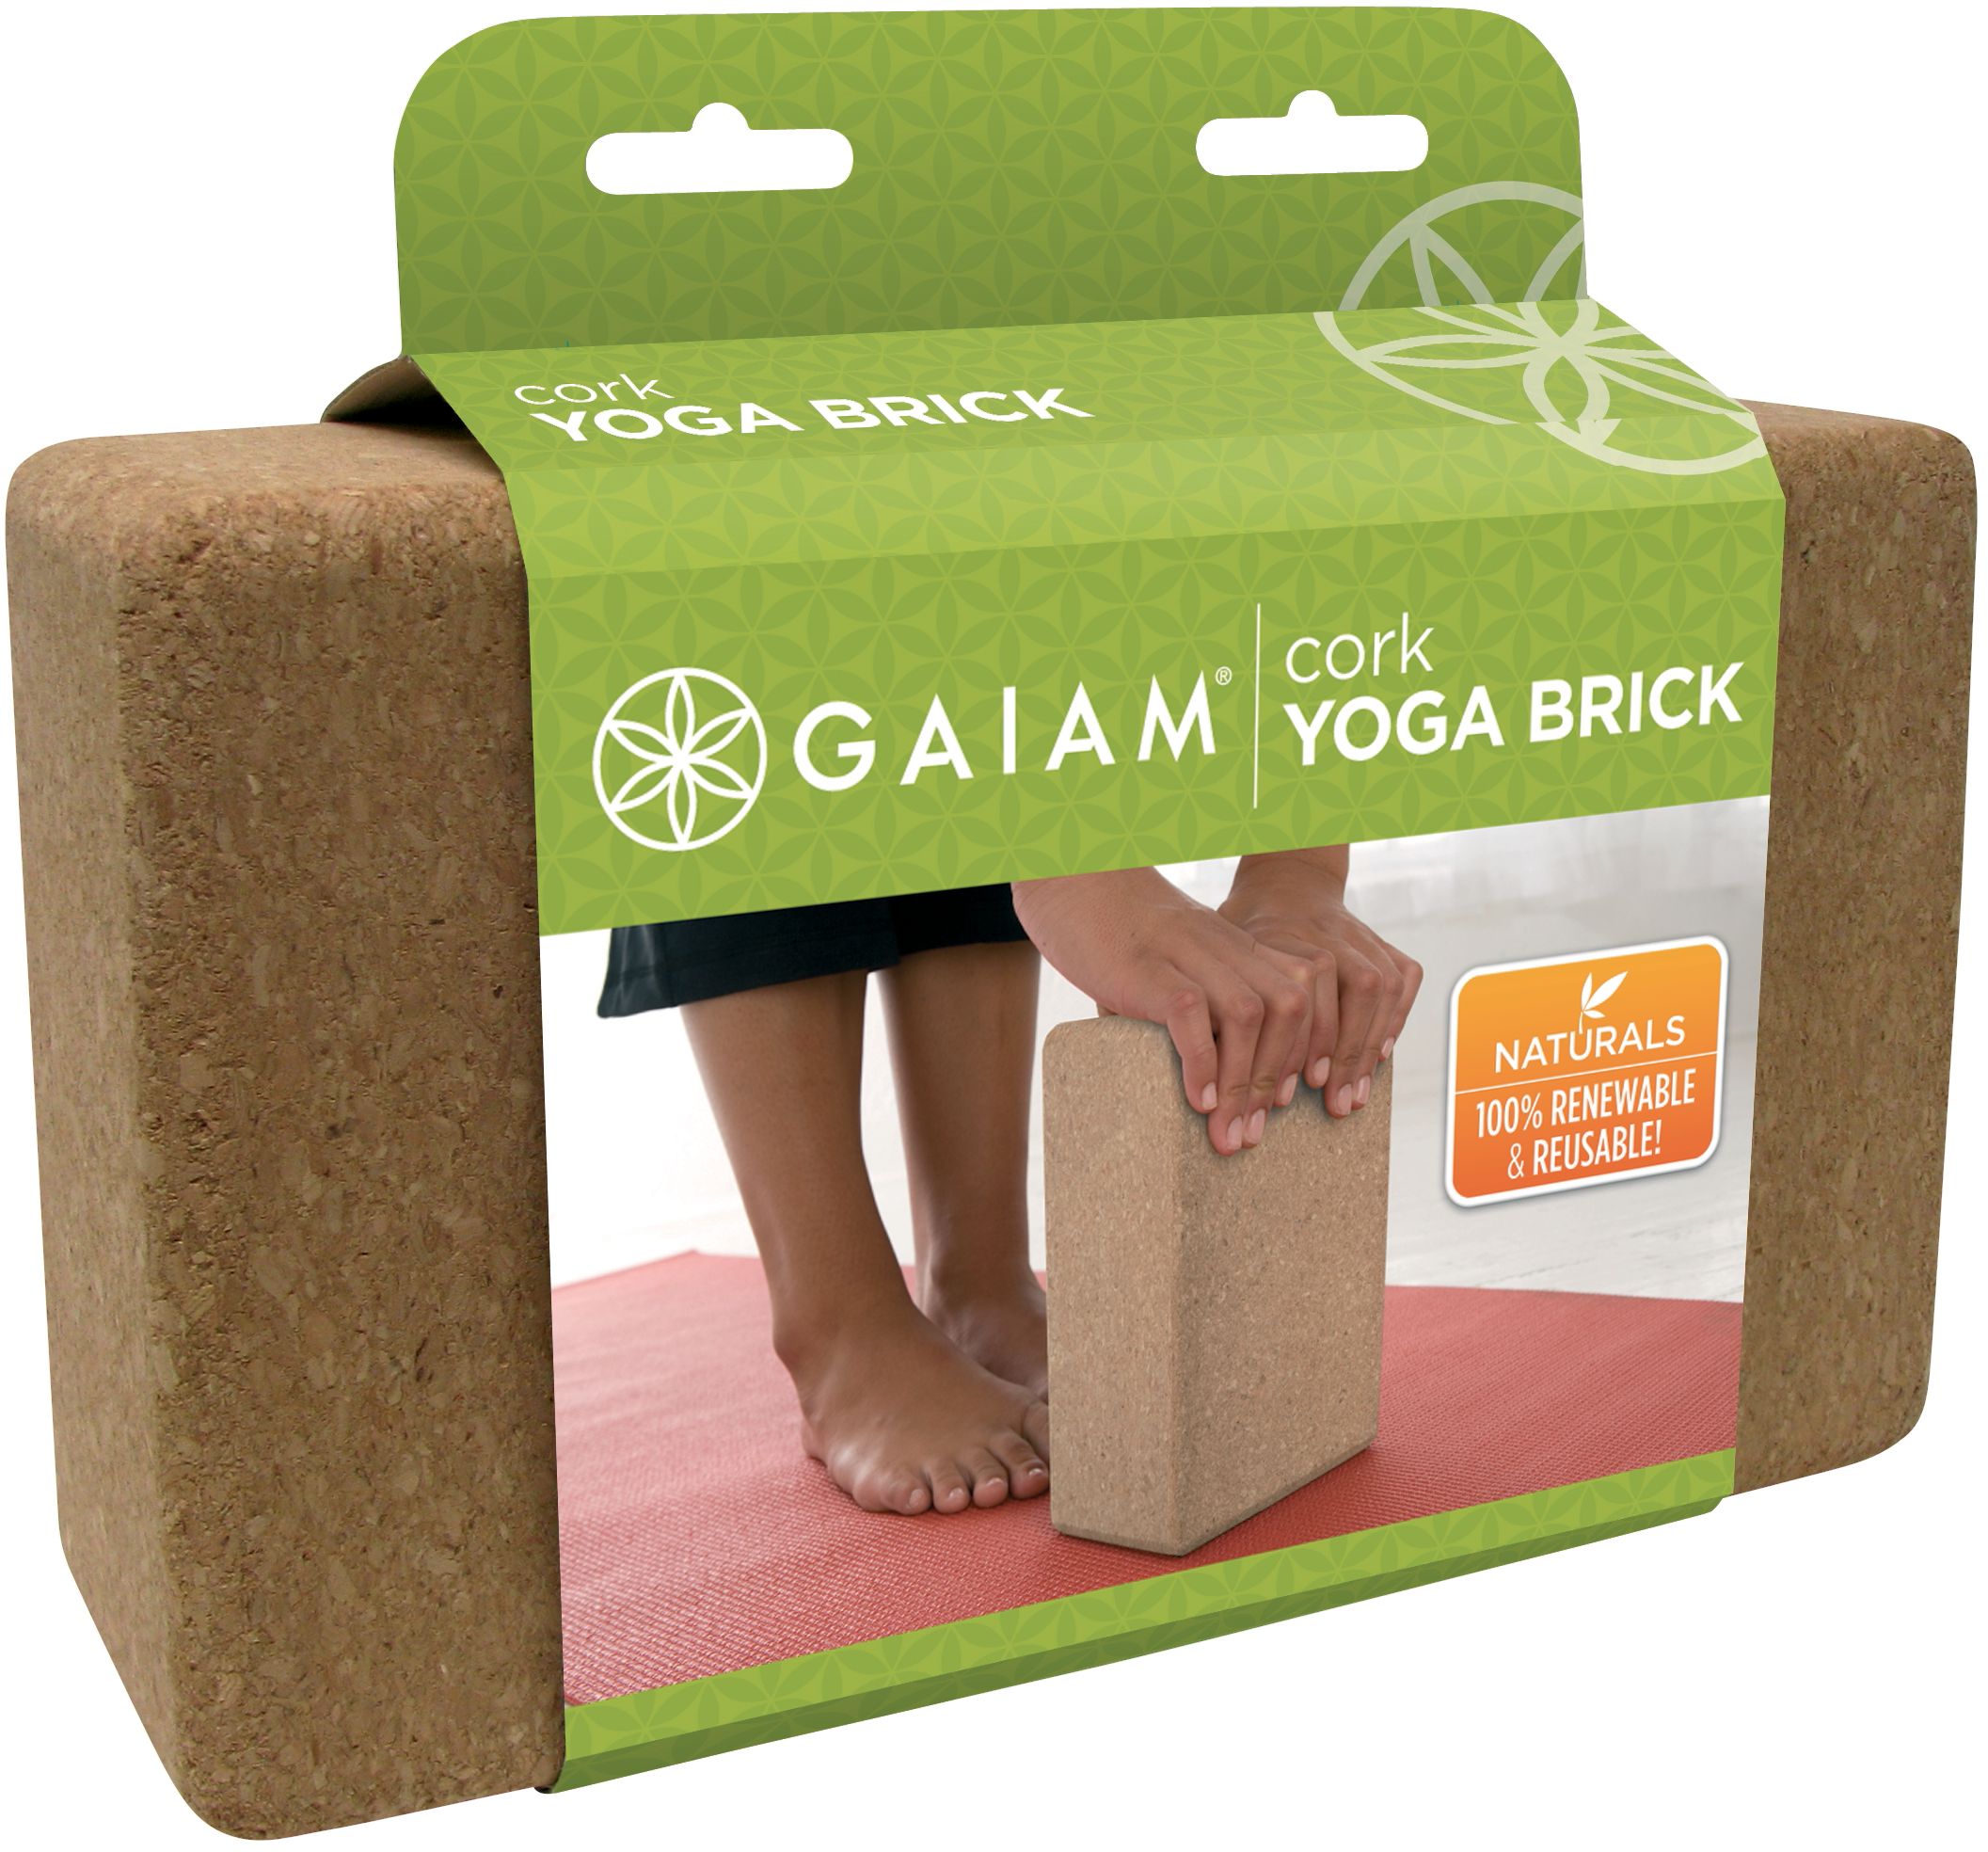 Image of Gaiam Cork Yoga Brick